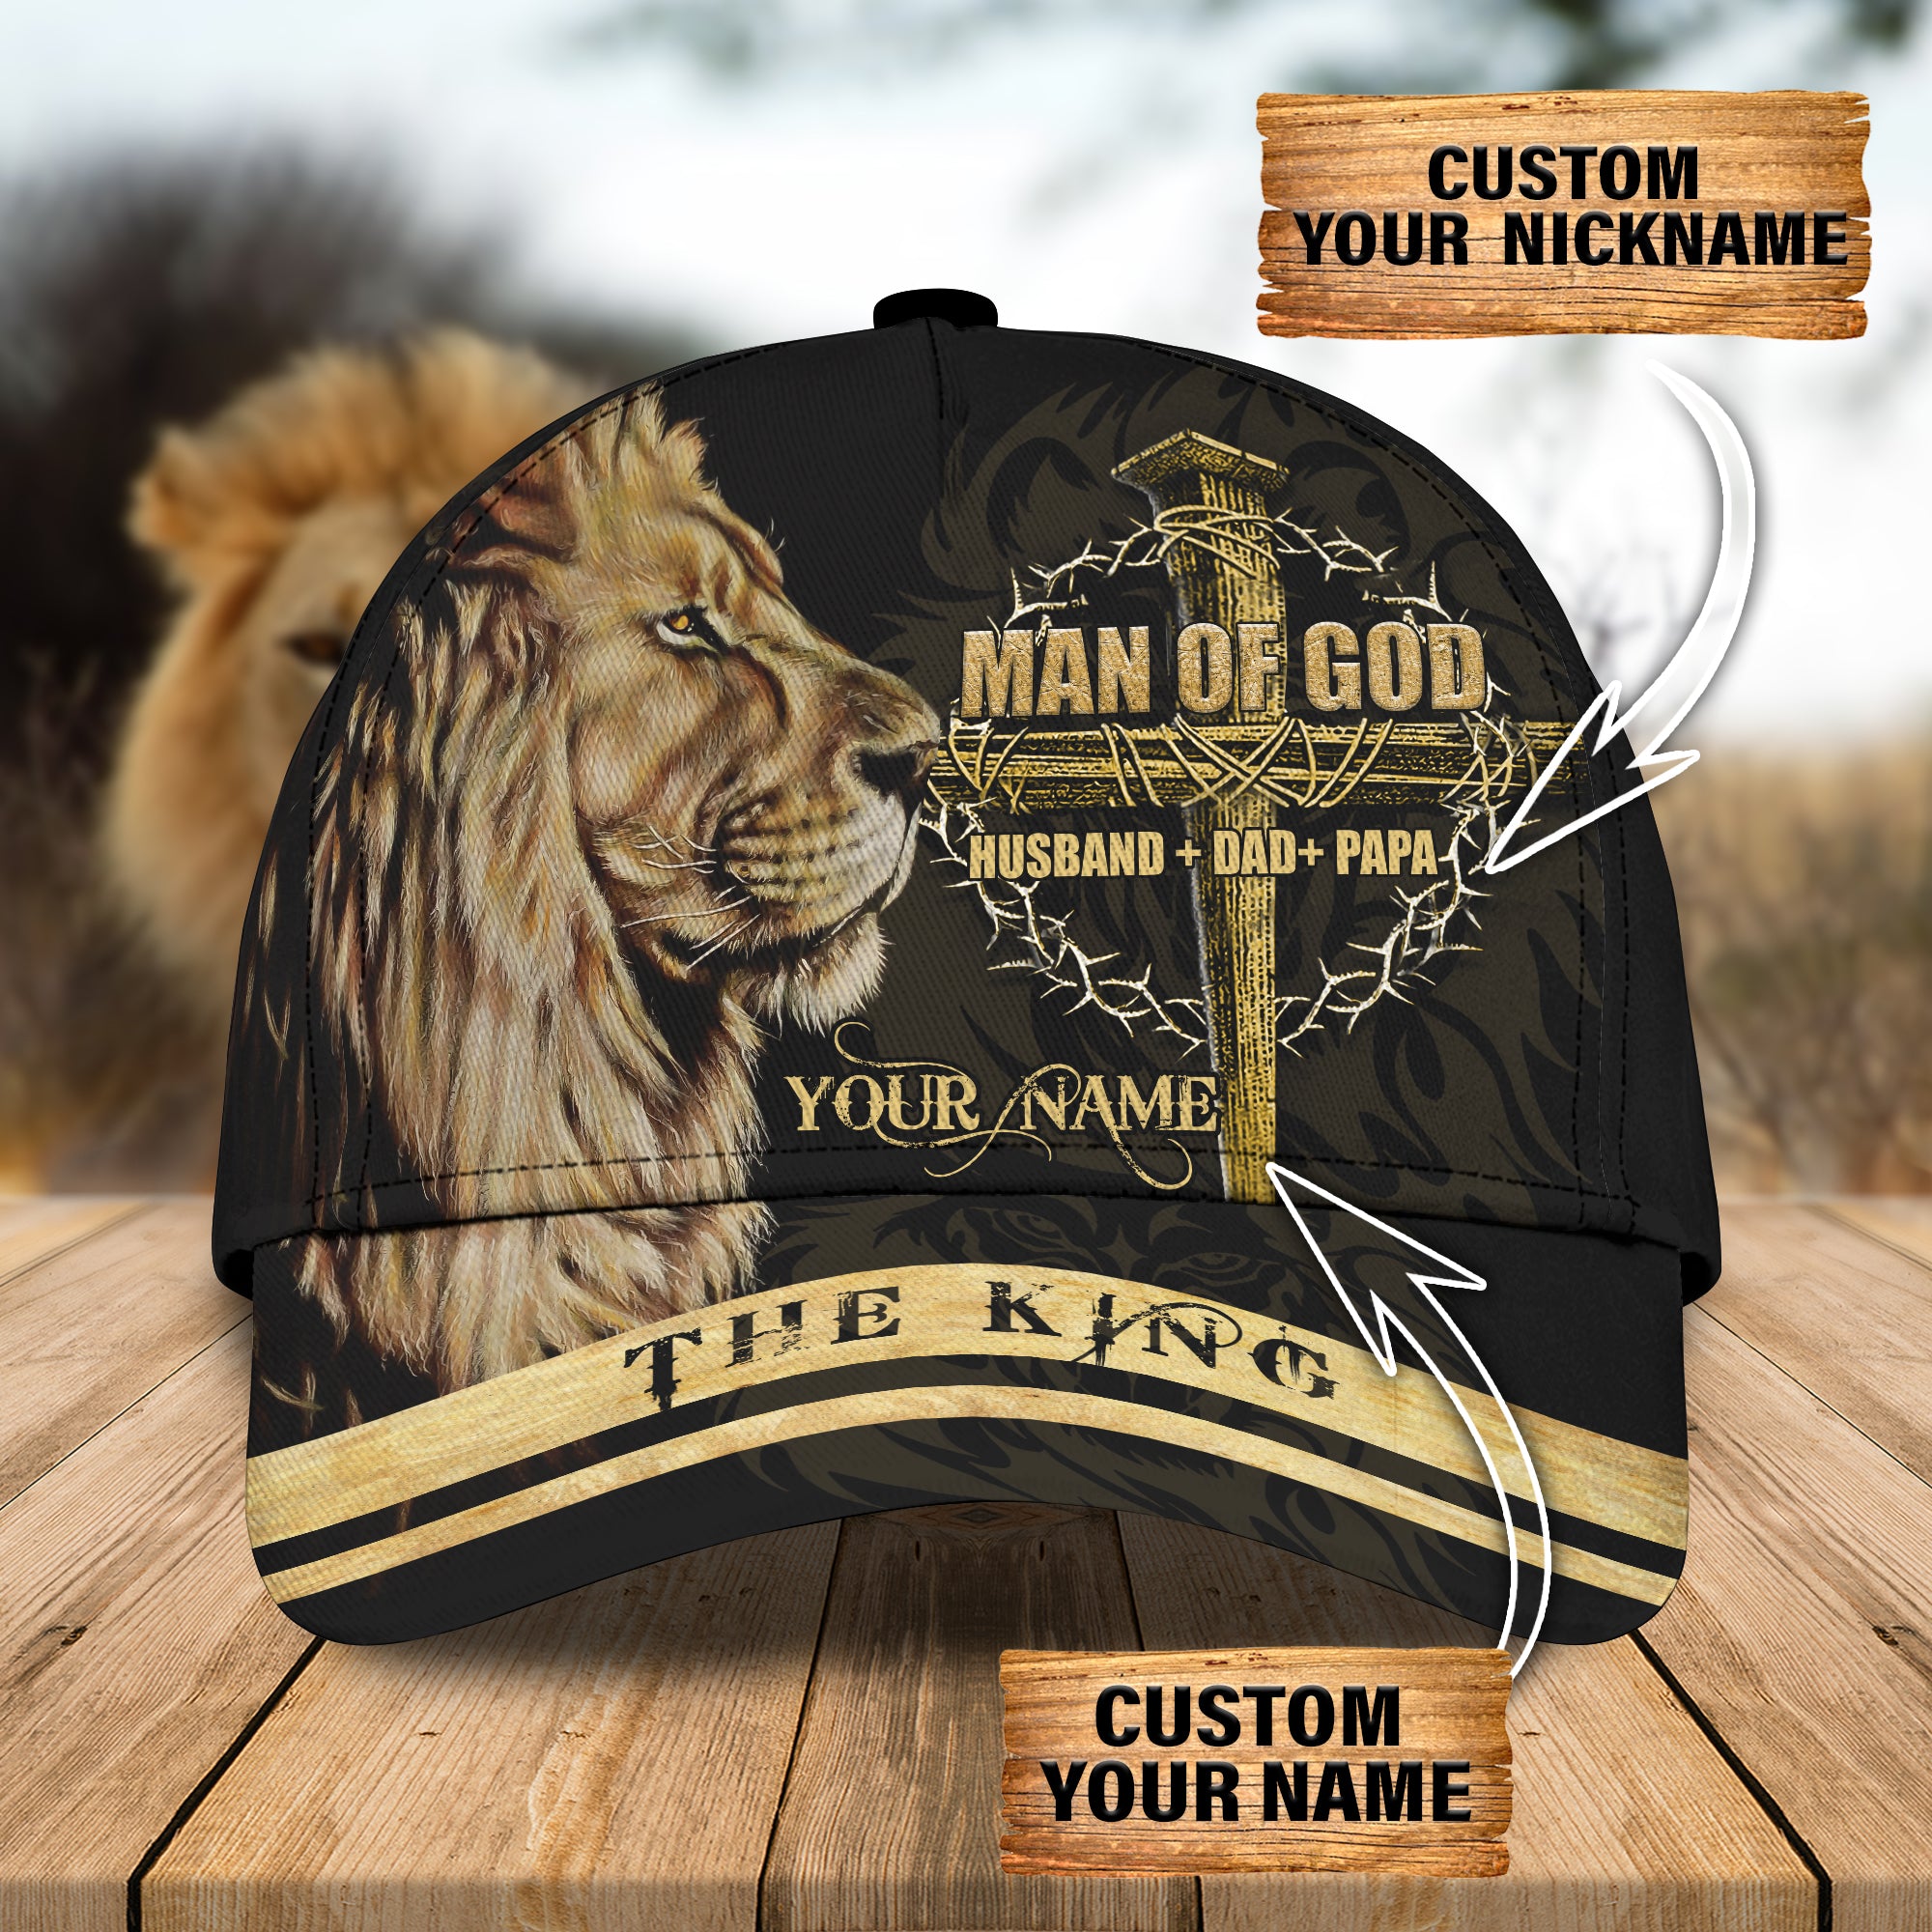 Man Of God 17 - Personalized Name Cap 17 - Bhn97